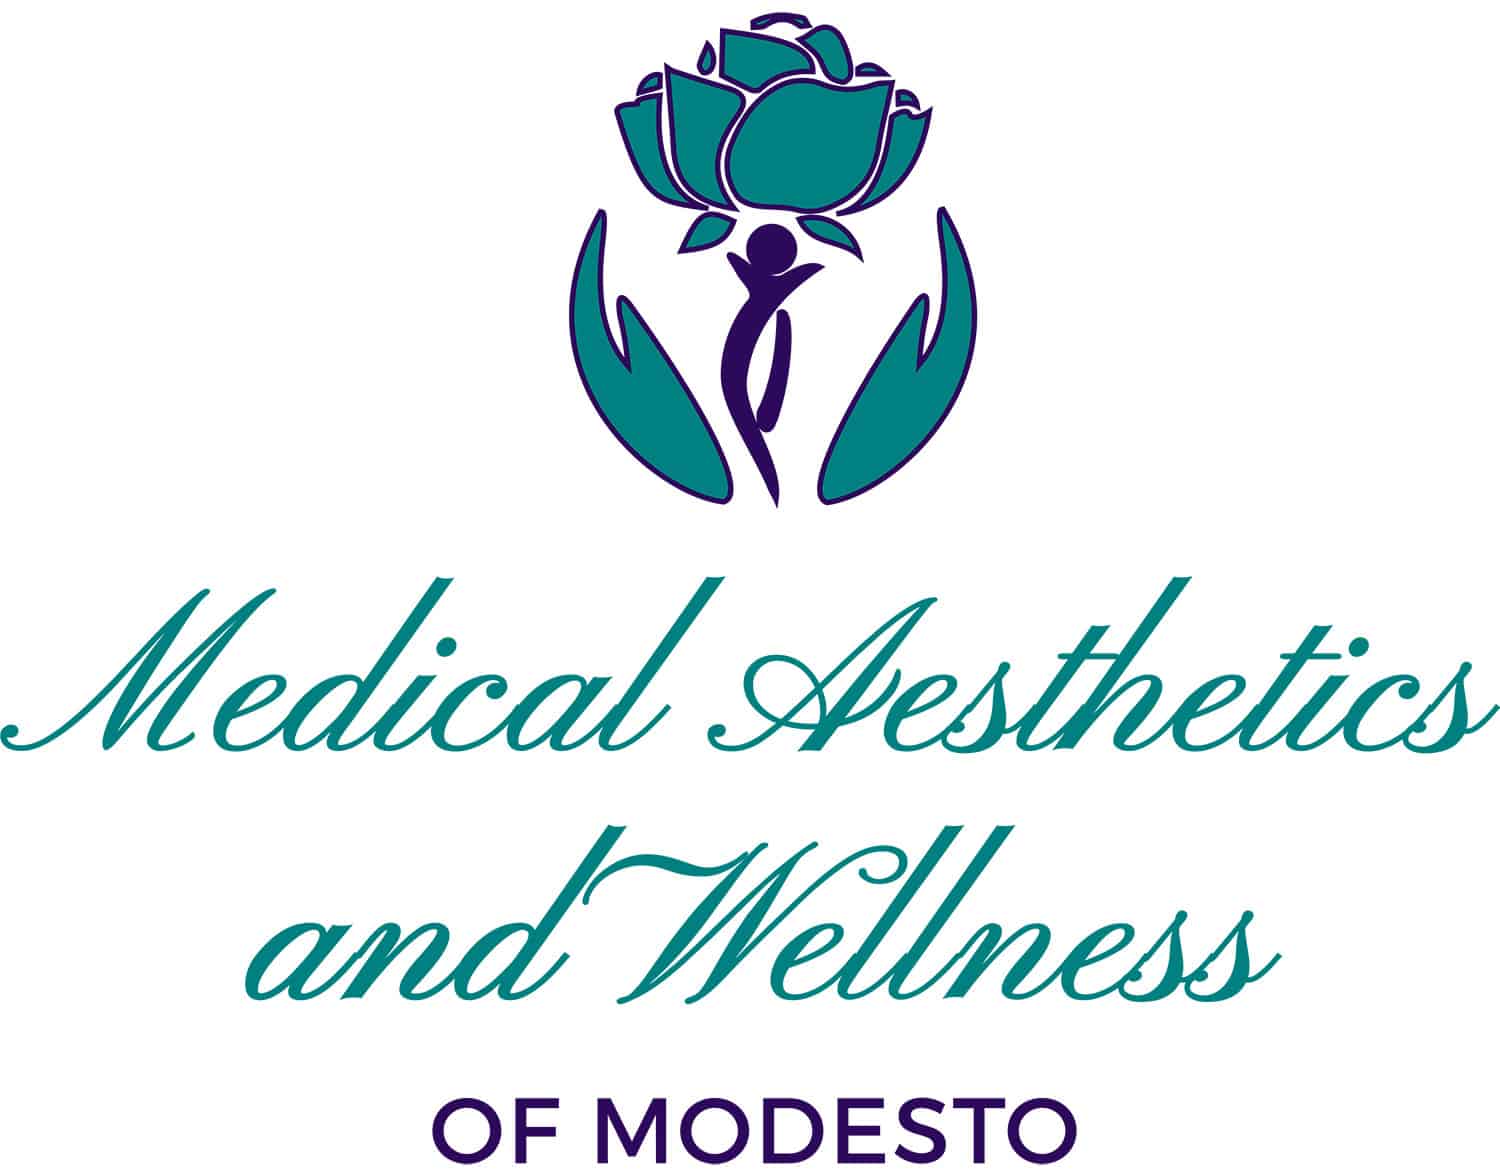 Medical Aesthetics & Wellness of Modesto